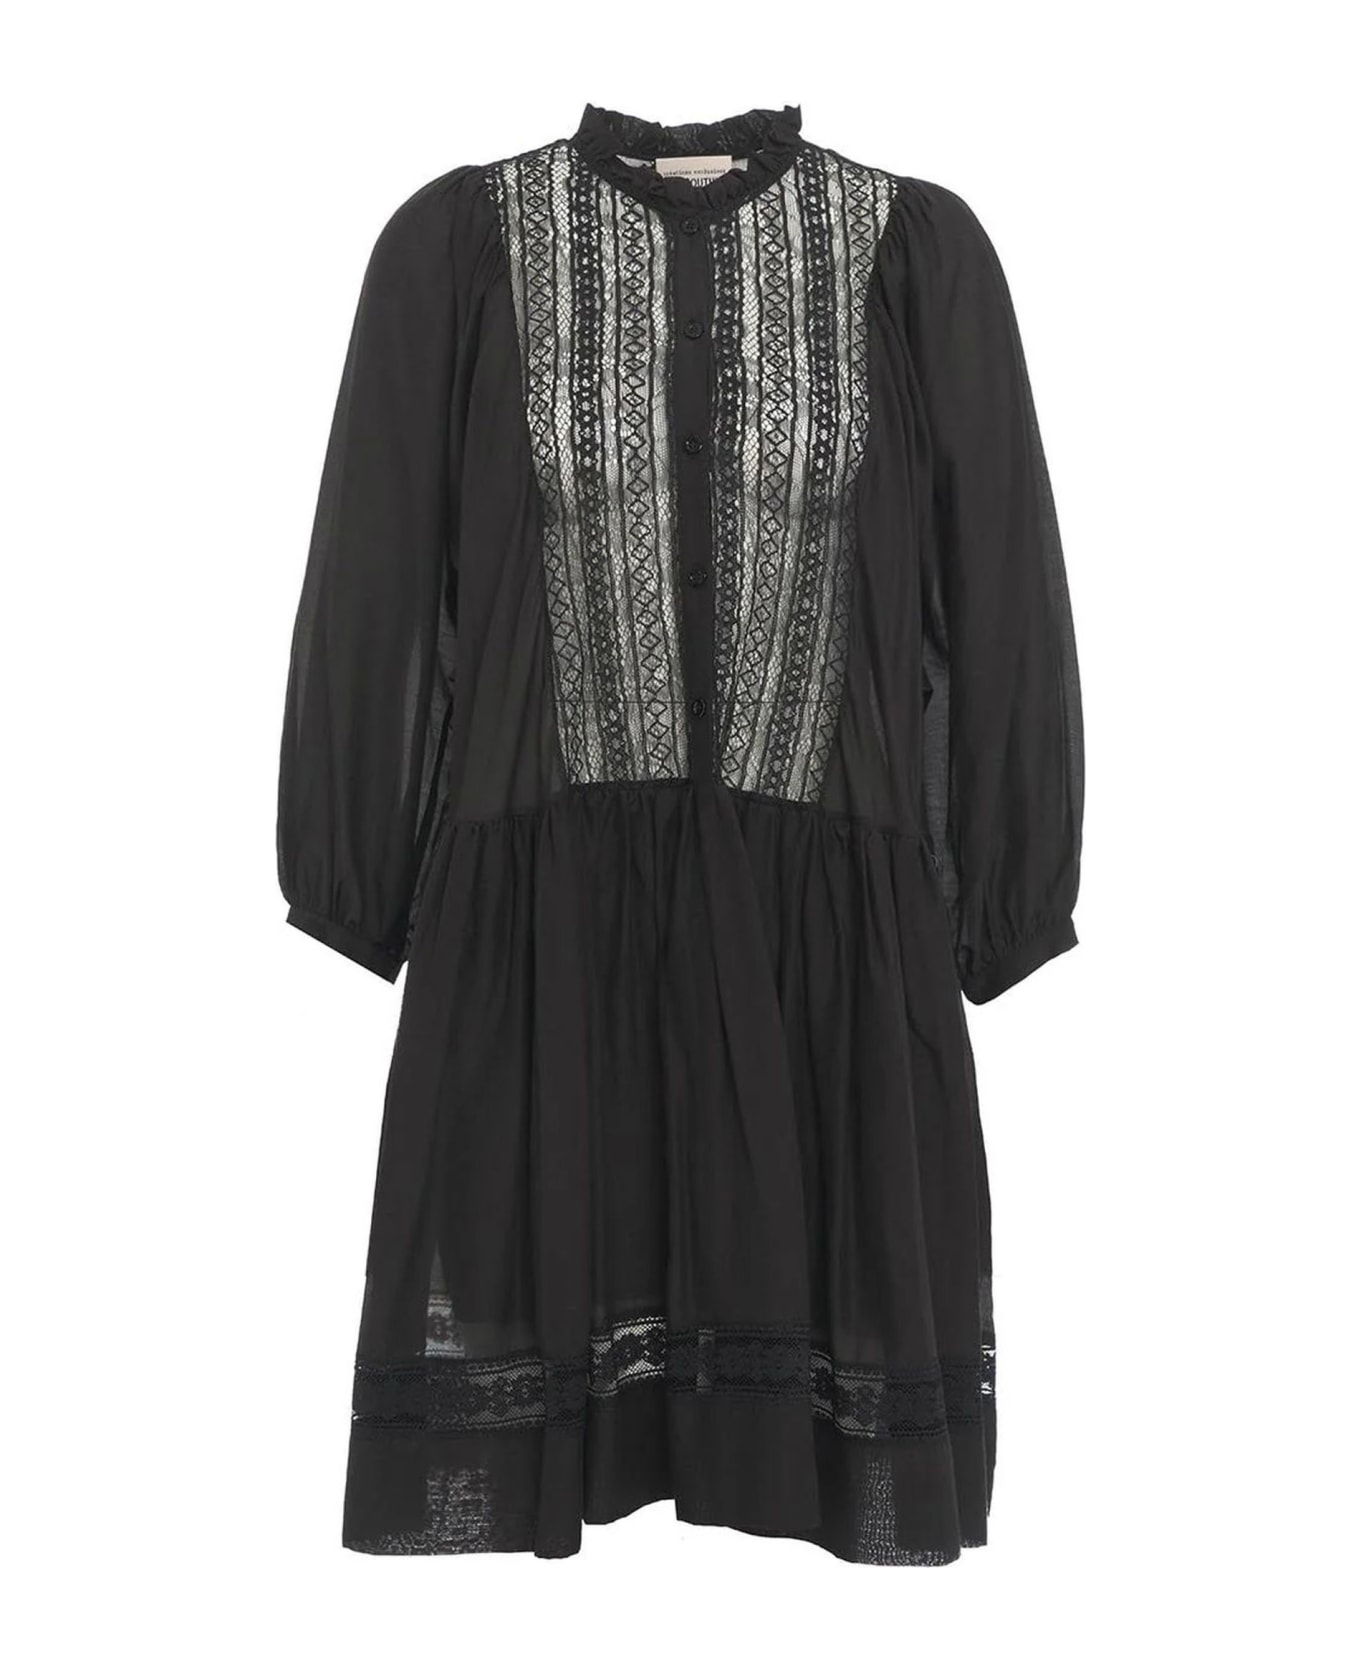 SEMICOUTURE Black Cotton Blend Dress - Black